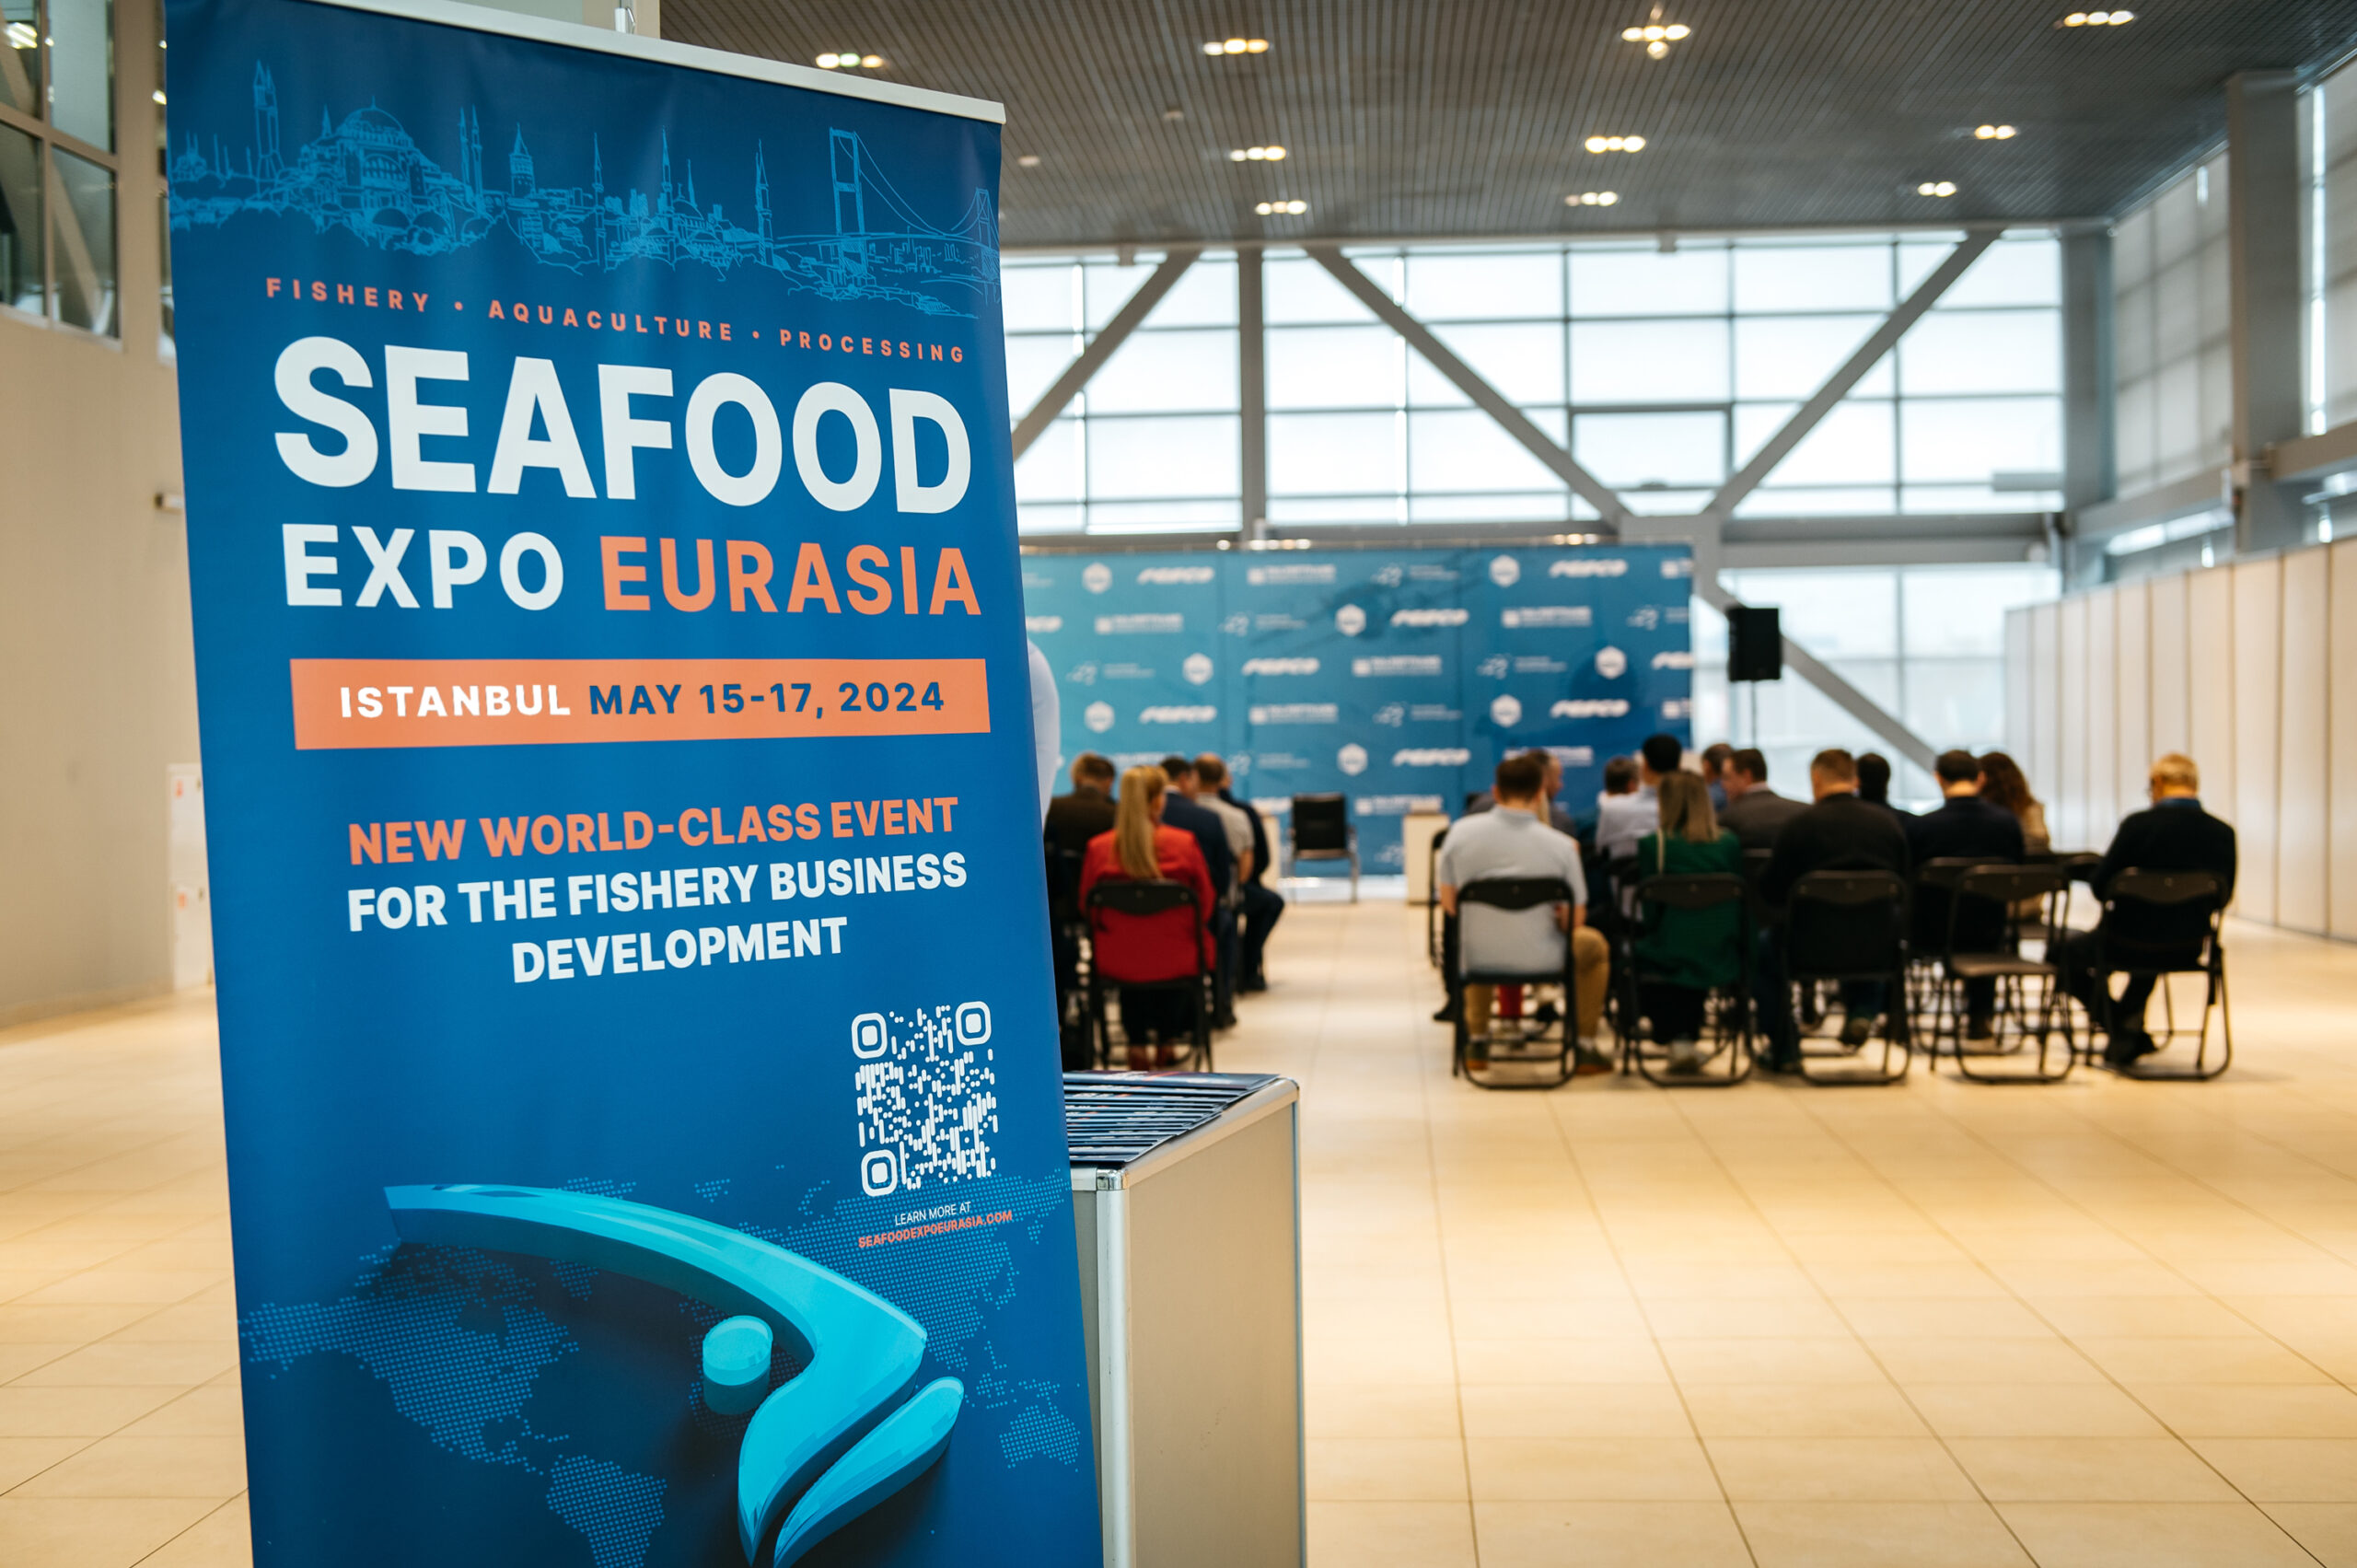 Seafood expo. Рыбная выставка в Стамбуле 2024. Иран Россия выставка Евразия Экспо стенд ладп. Expo Eurasia Kazakhstan 2024.